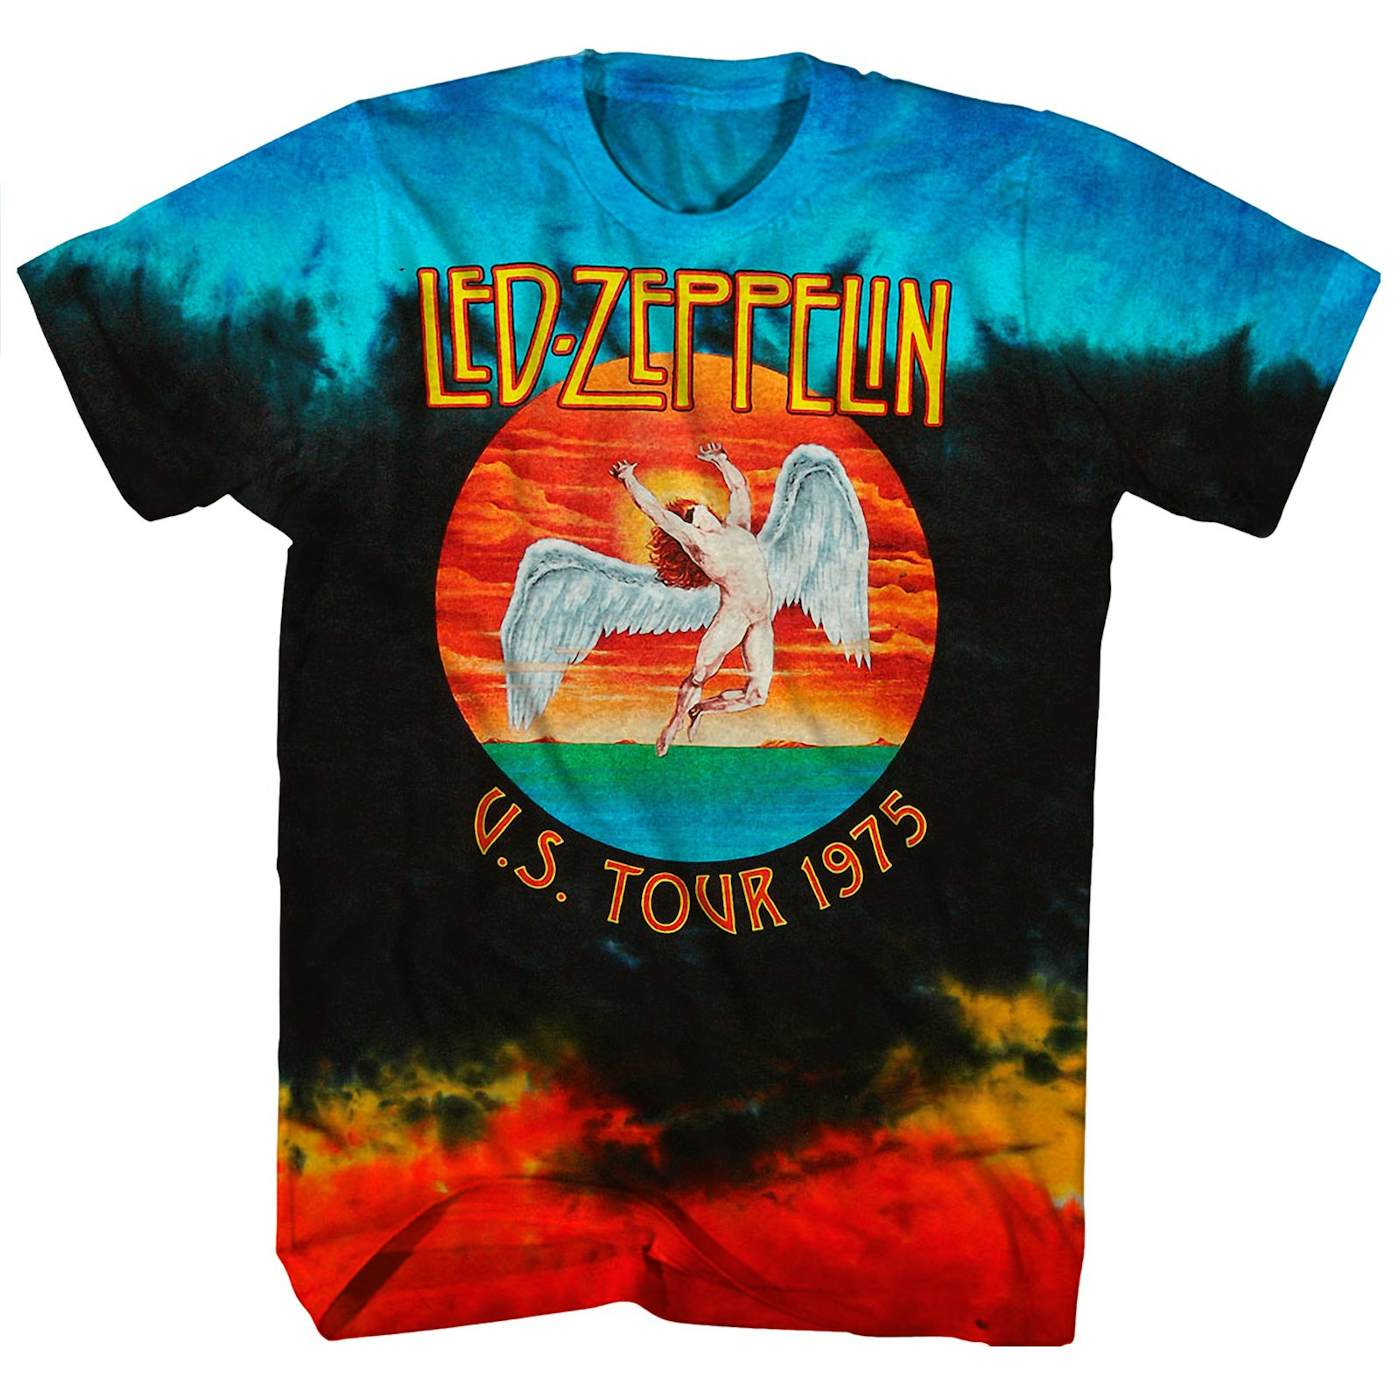 LED Zeppelin The Band Sweatshirt, M / Blue